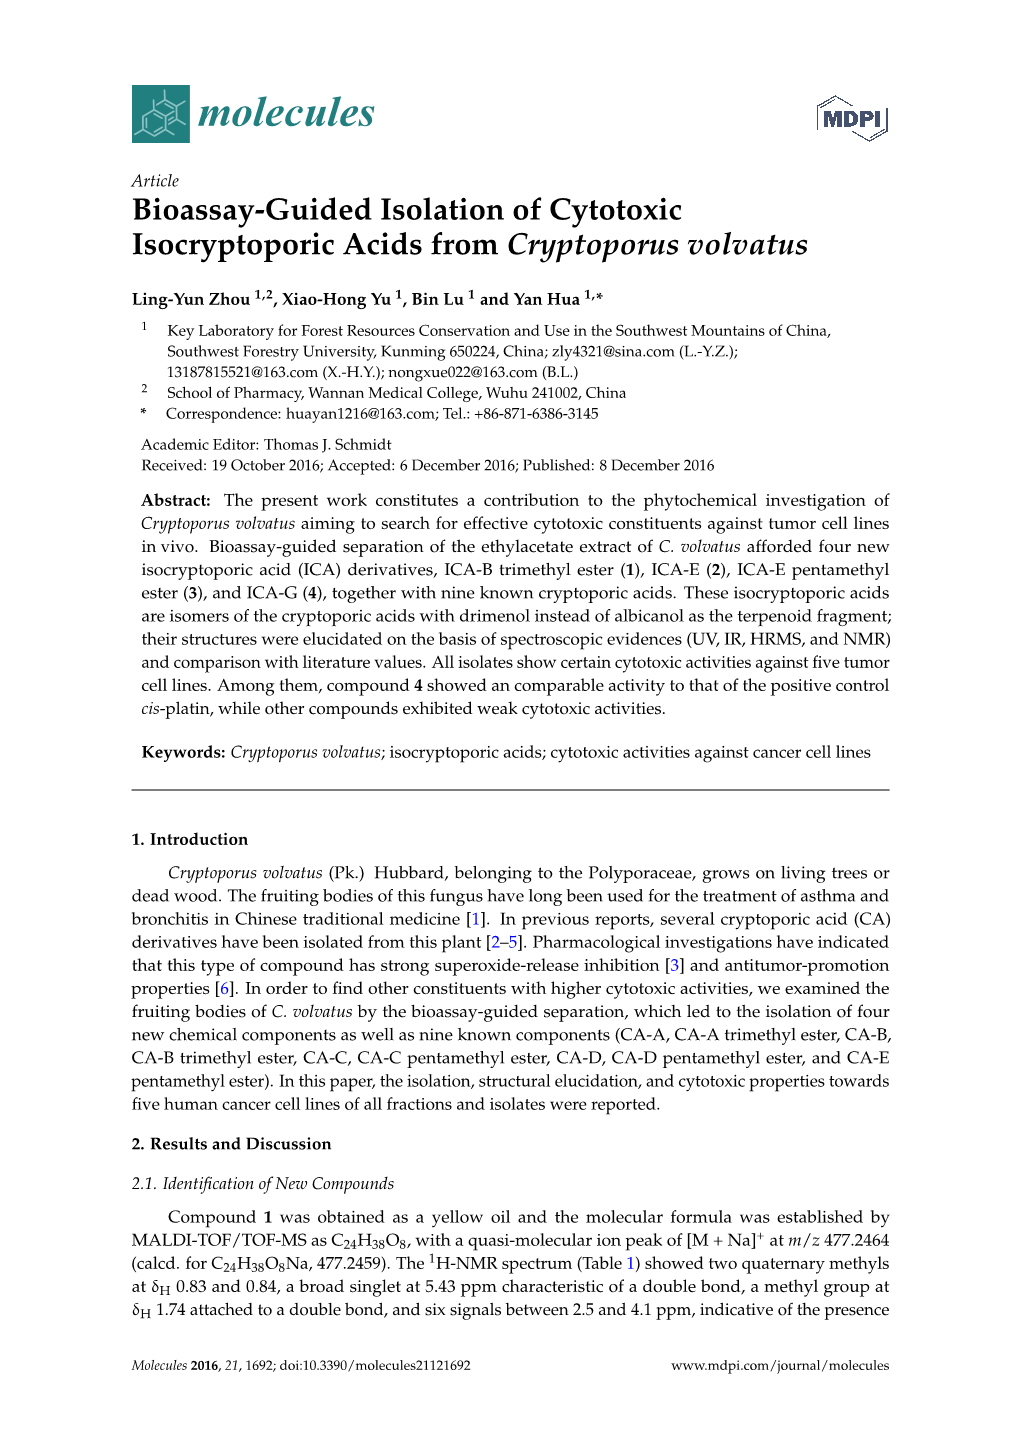 Bioassay-Guided Isolation of Cytotoxic Isocryptoporic Acids from Cryptoporus Volvatus